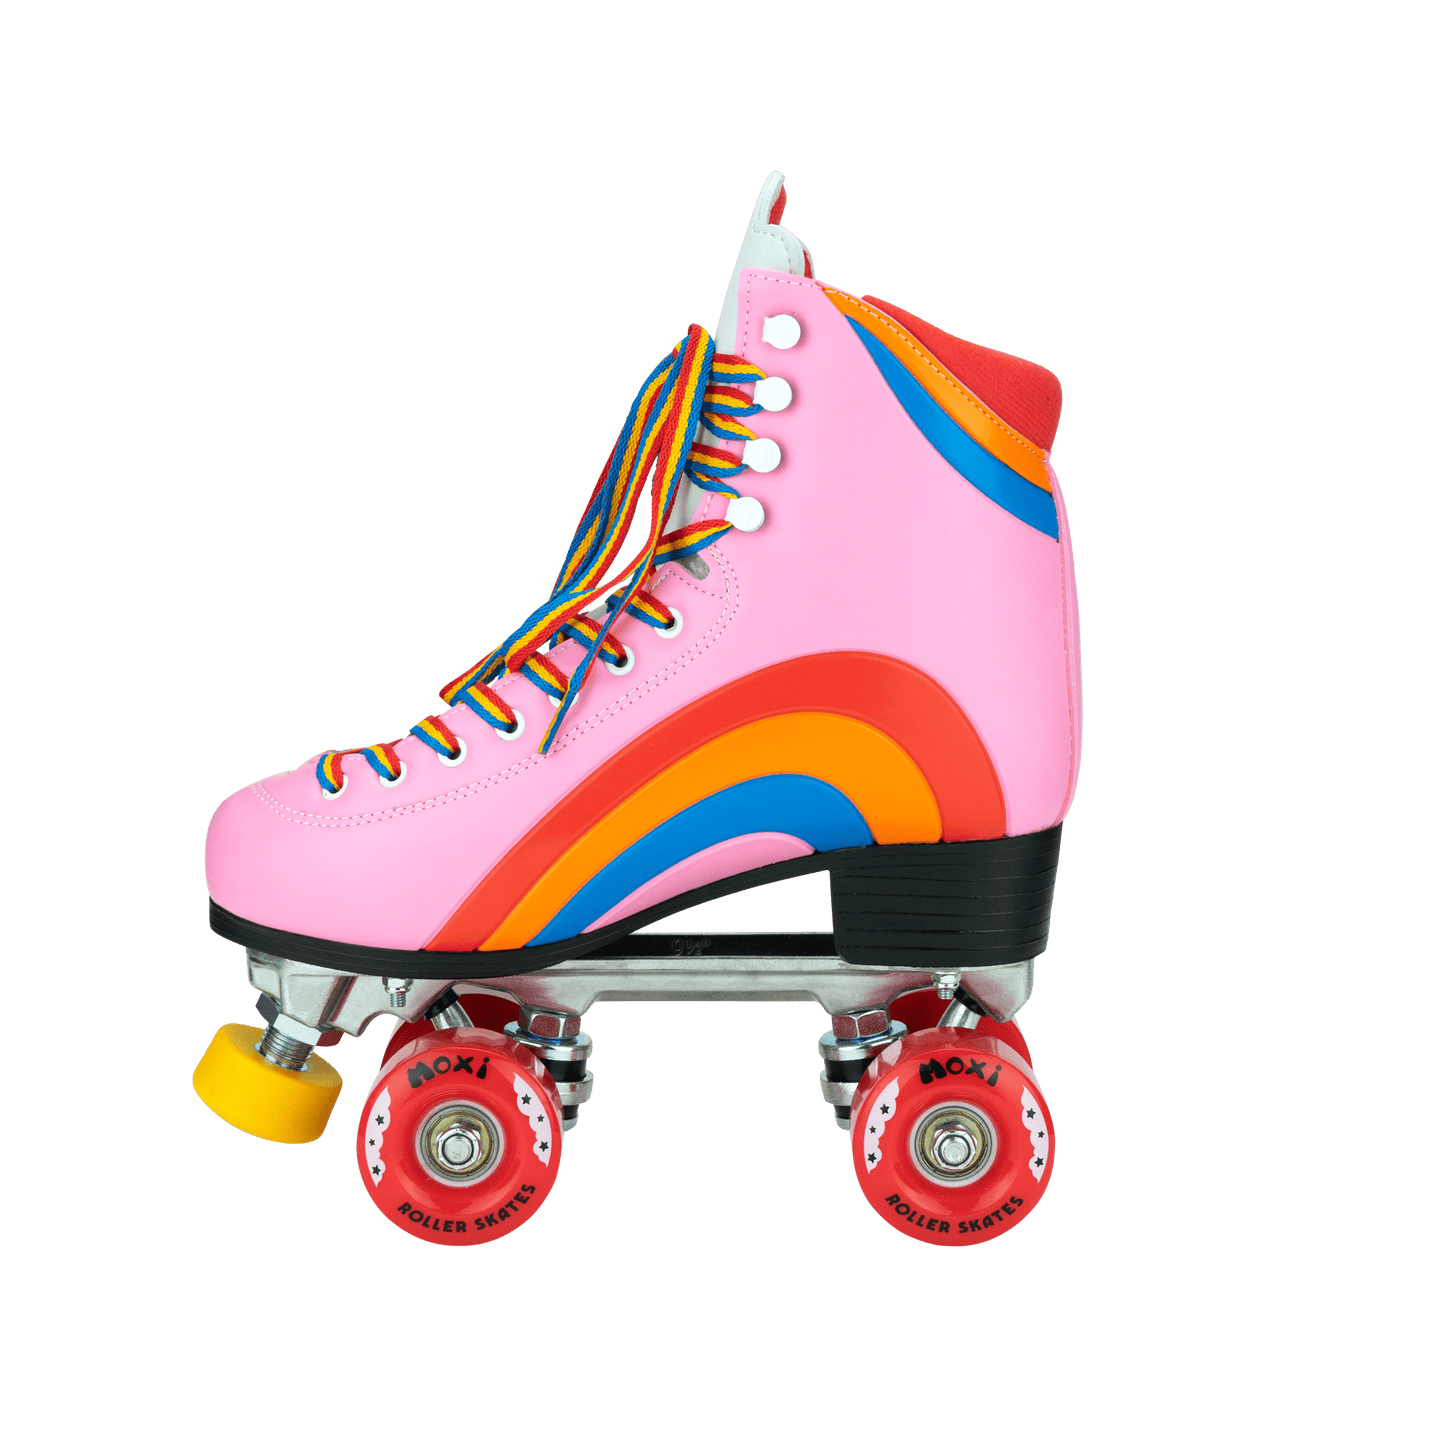 Moxi Rainbow Rider Pink Heart Skates - ON SALE